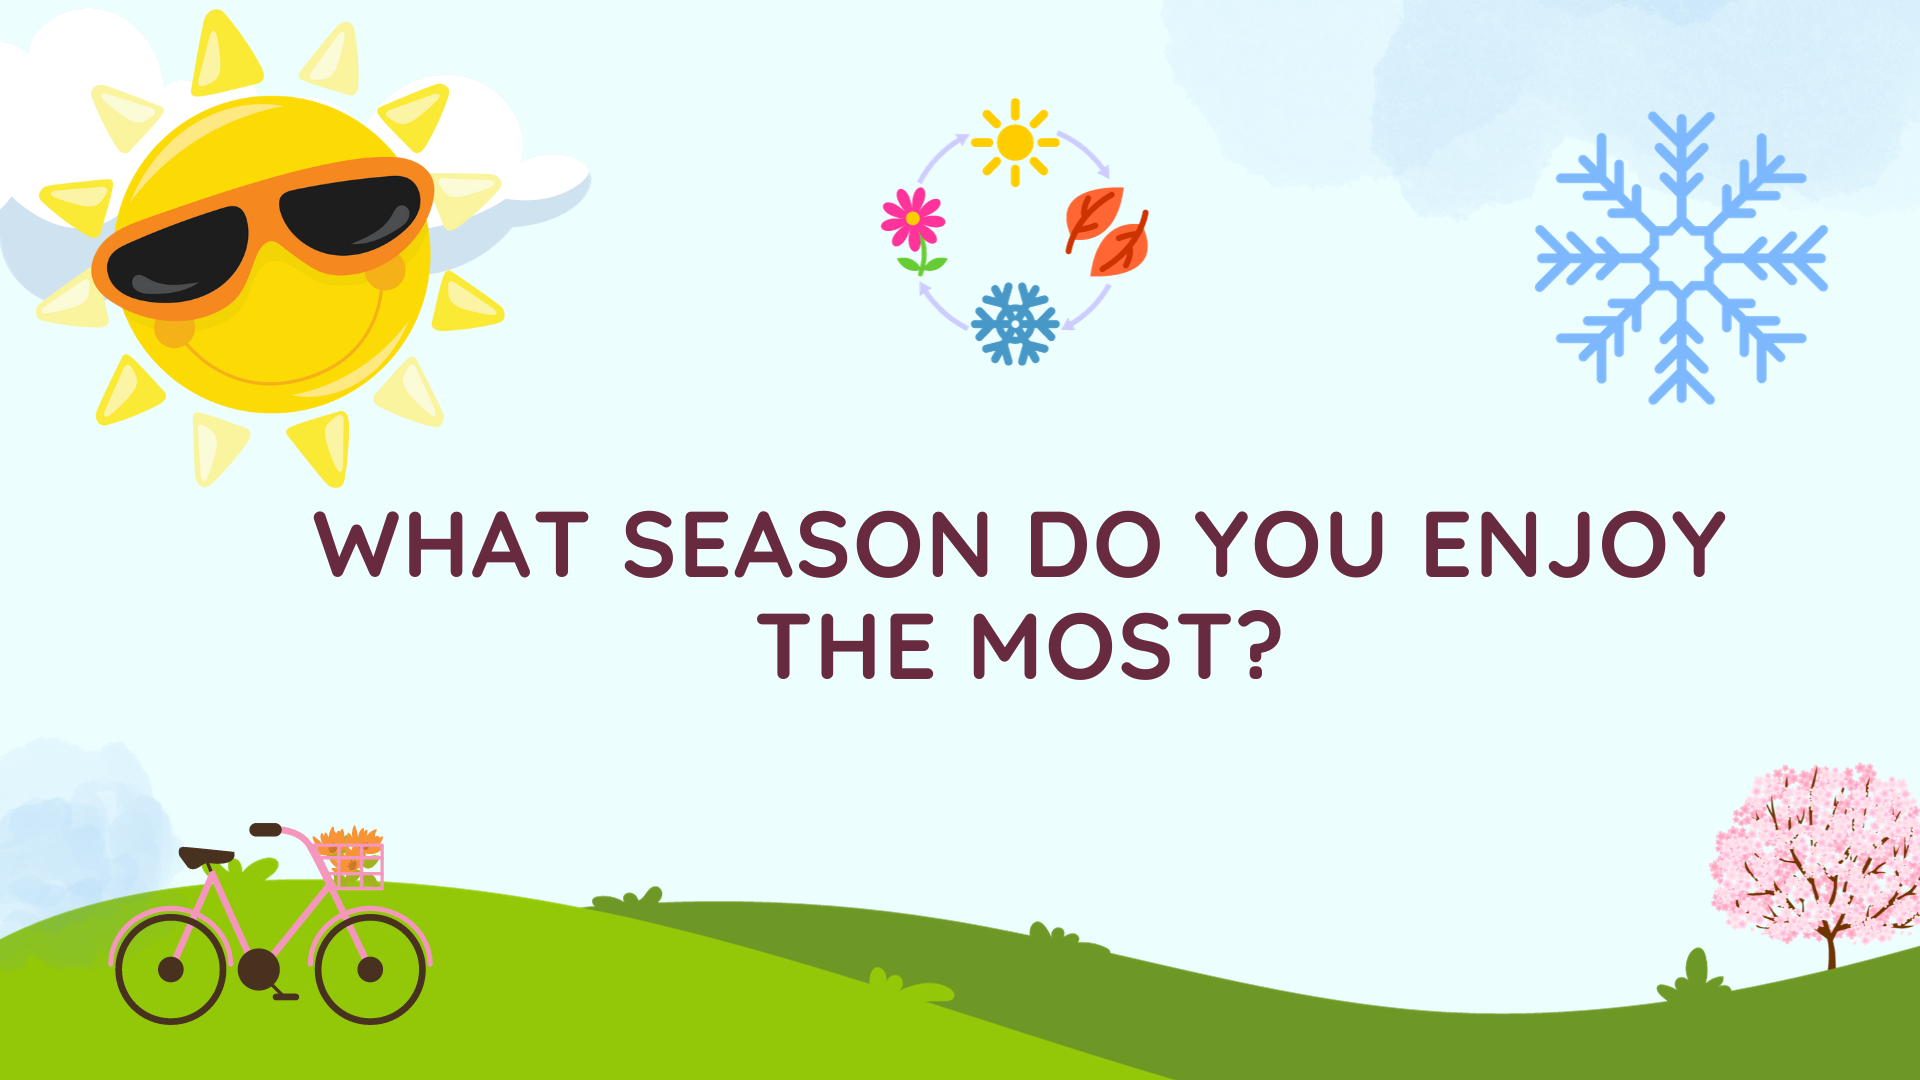 B.O.B: What season do you enjoy the most?